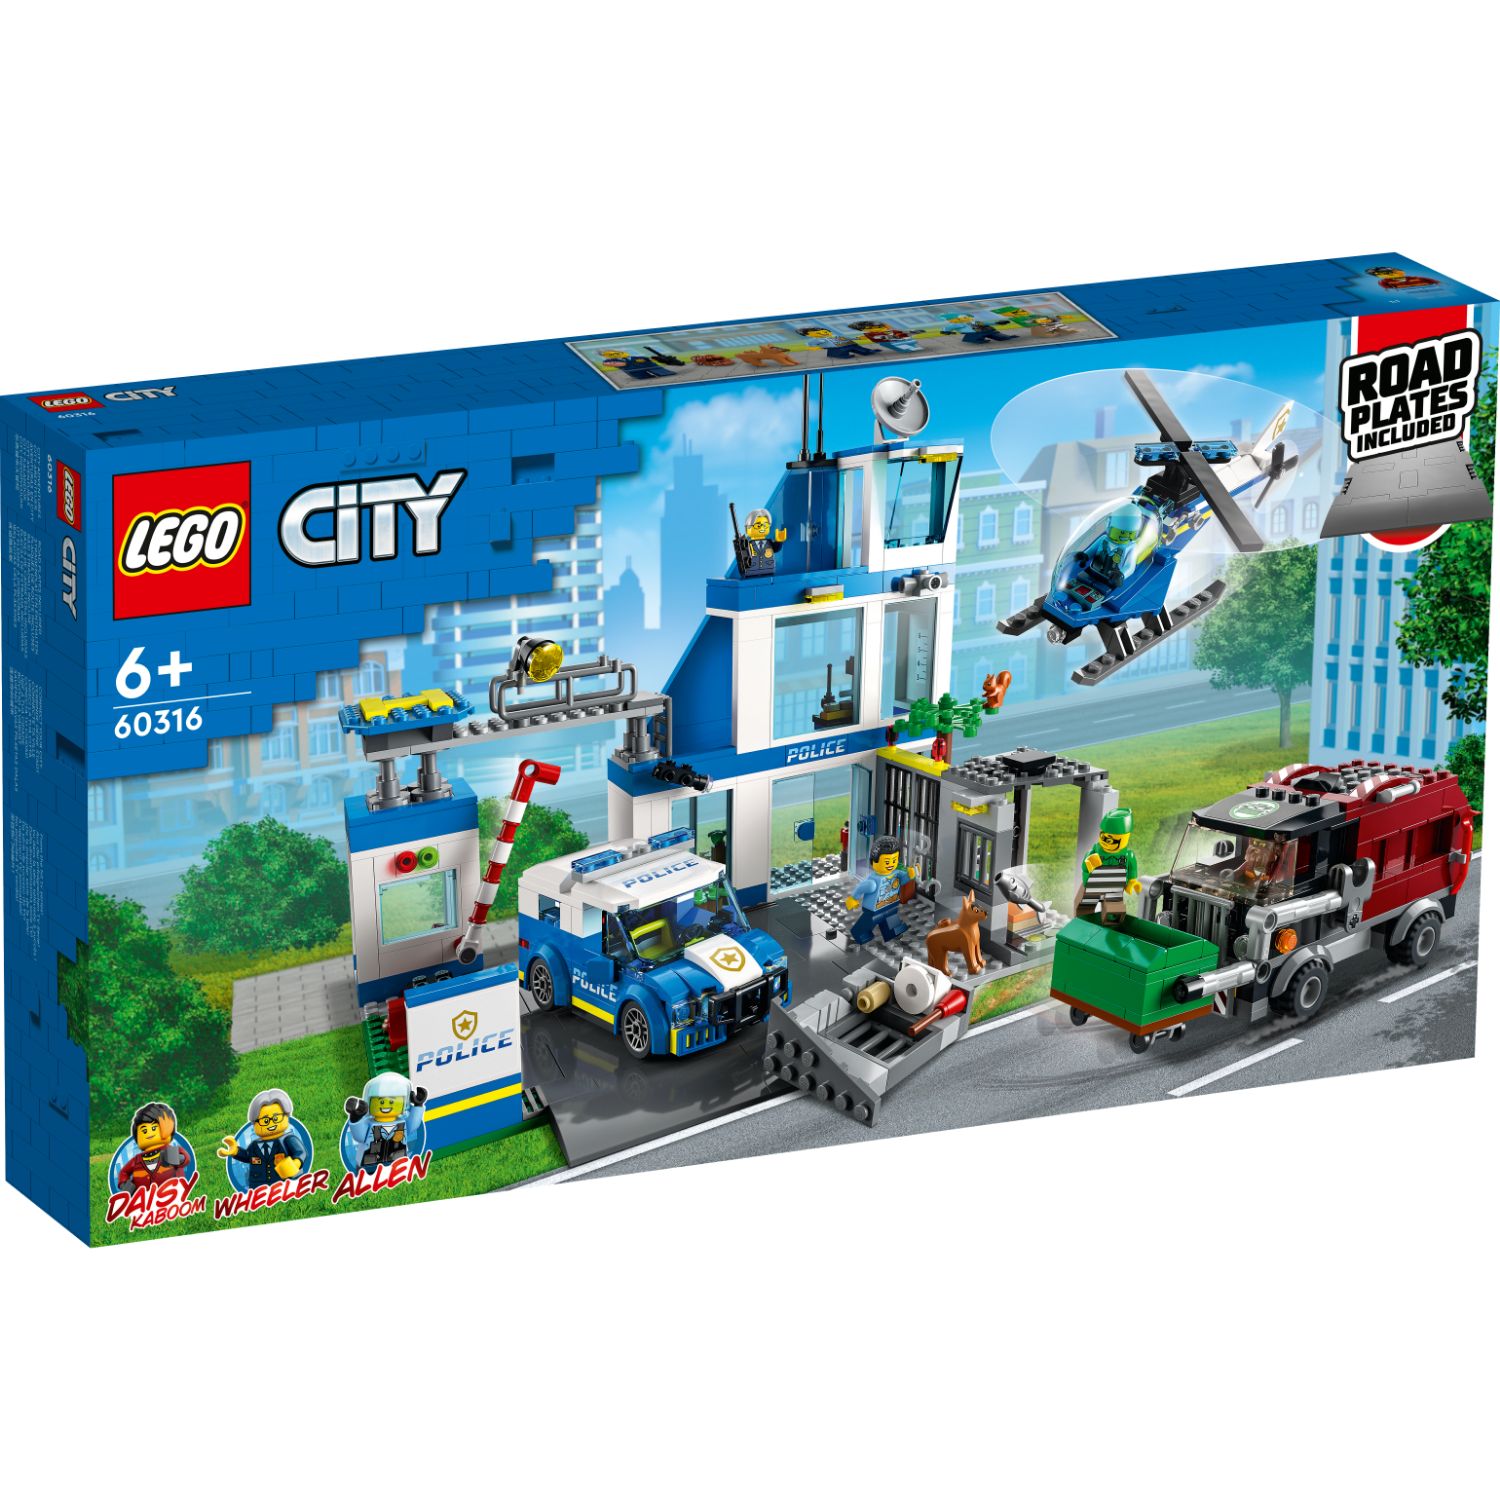 LEGO CITY 60316 POLITIEBUREAU - 411 6631 - 527123